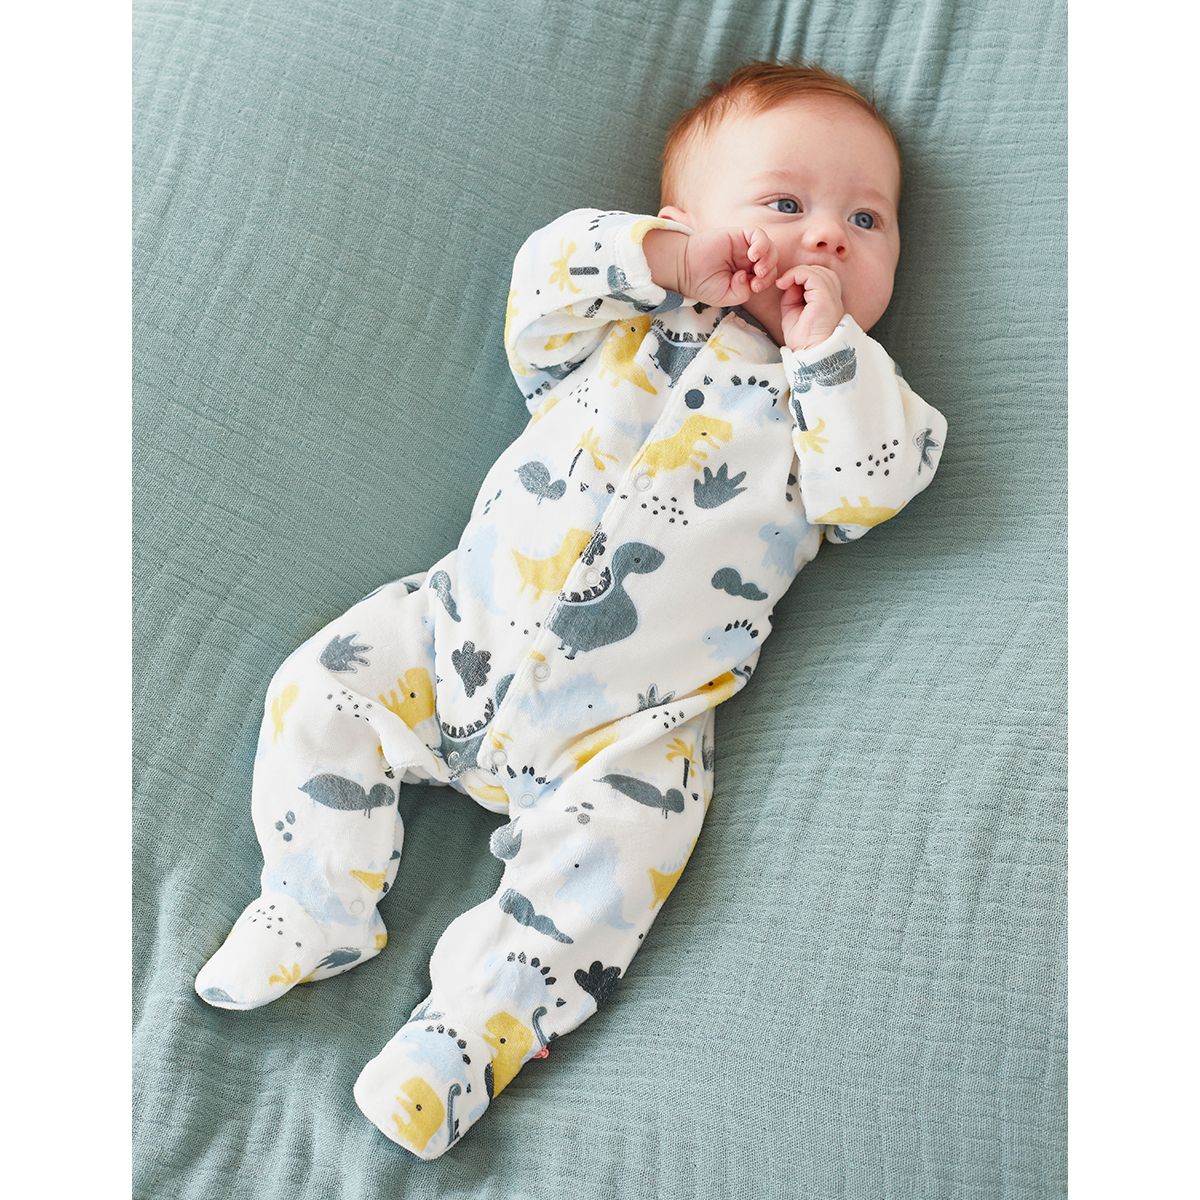 KIABI / Pyjama 1 mois - Bébé garçon 0-3 ans/Bodys / Pyjamas - Les